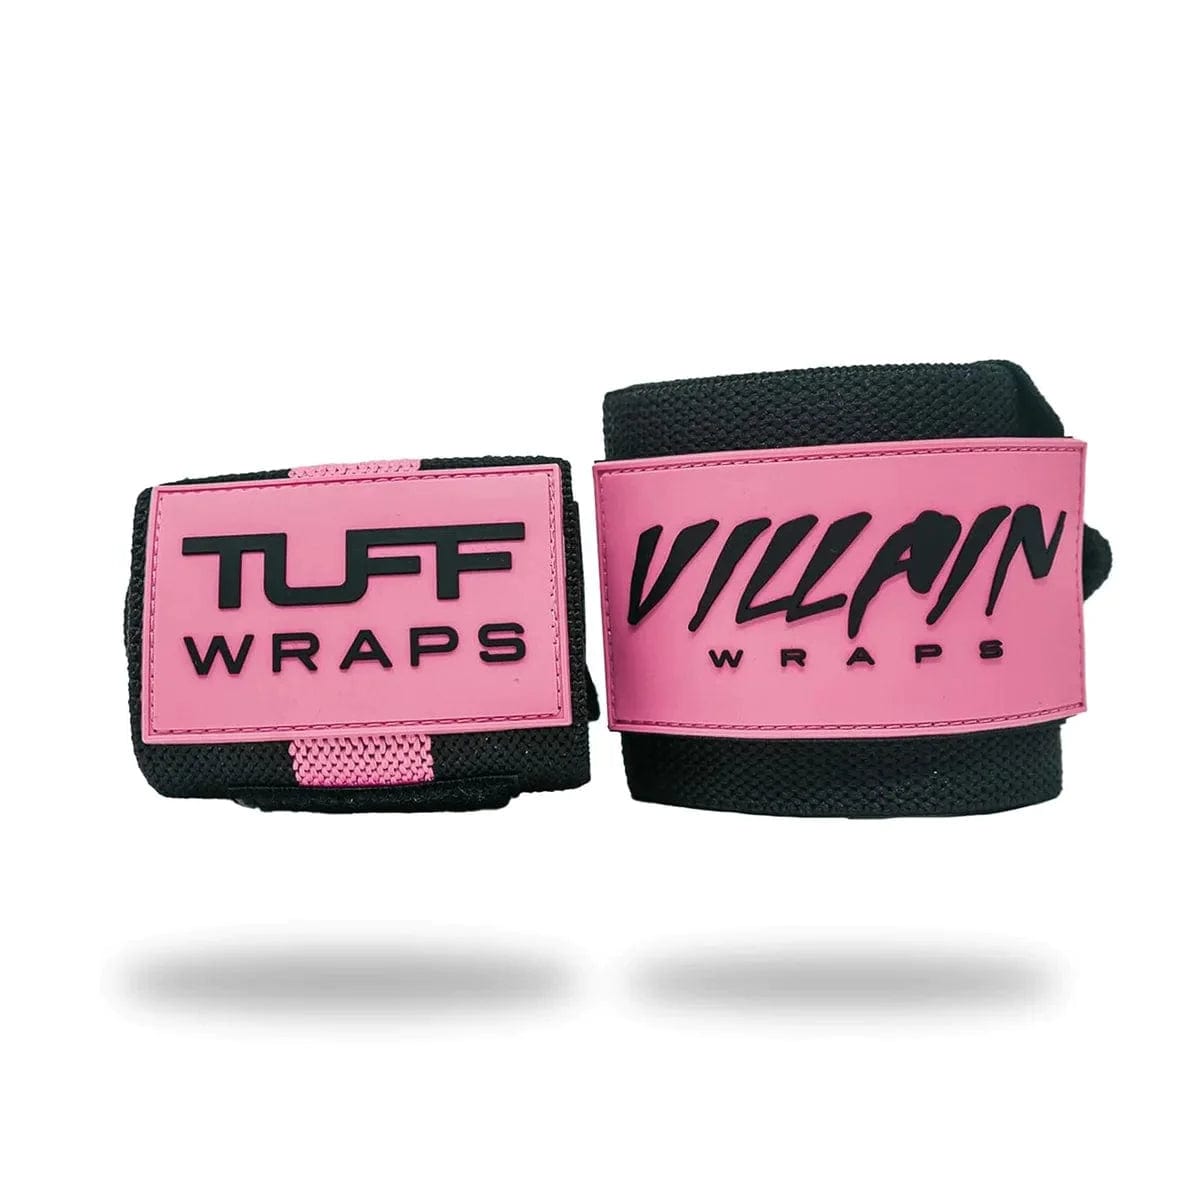 16" Villain Sidekick Wrist Wraps - Black & Pink Wrist Wraps